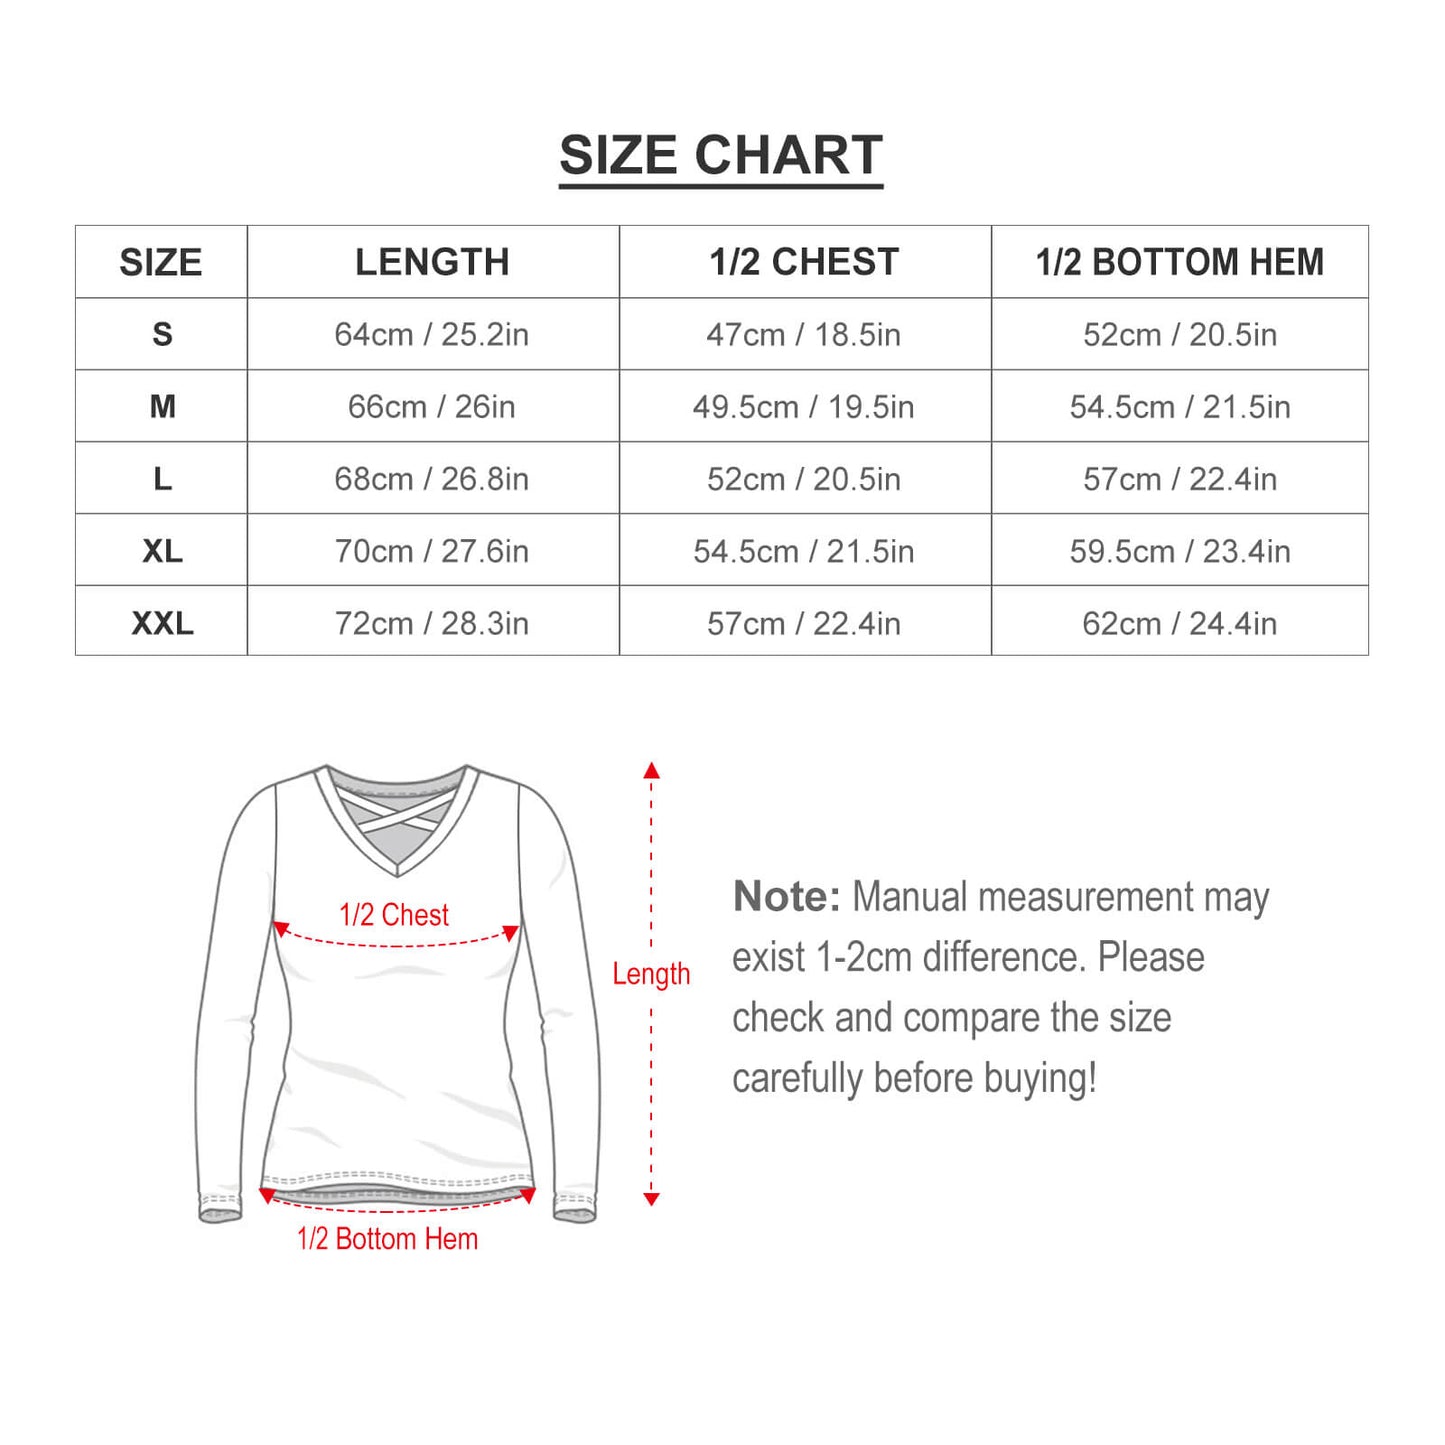 Online DIY T-shirt for Women Long-sleeved T-shirt Zebra Pattern